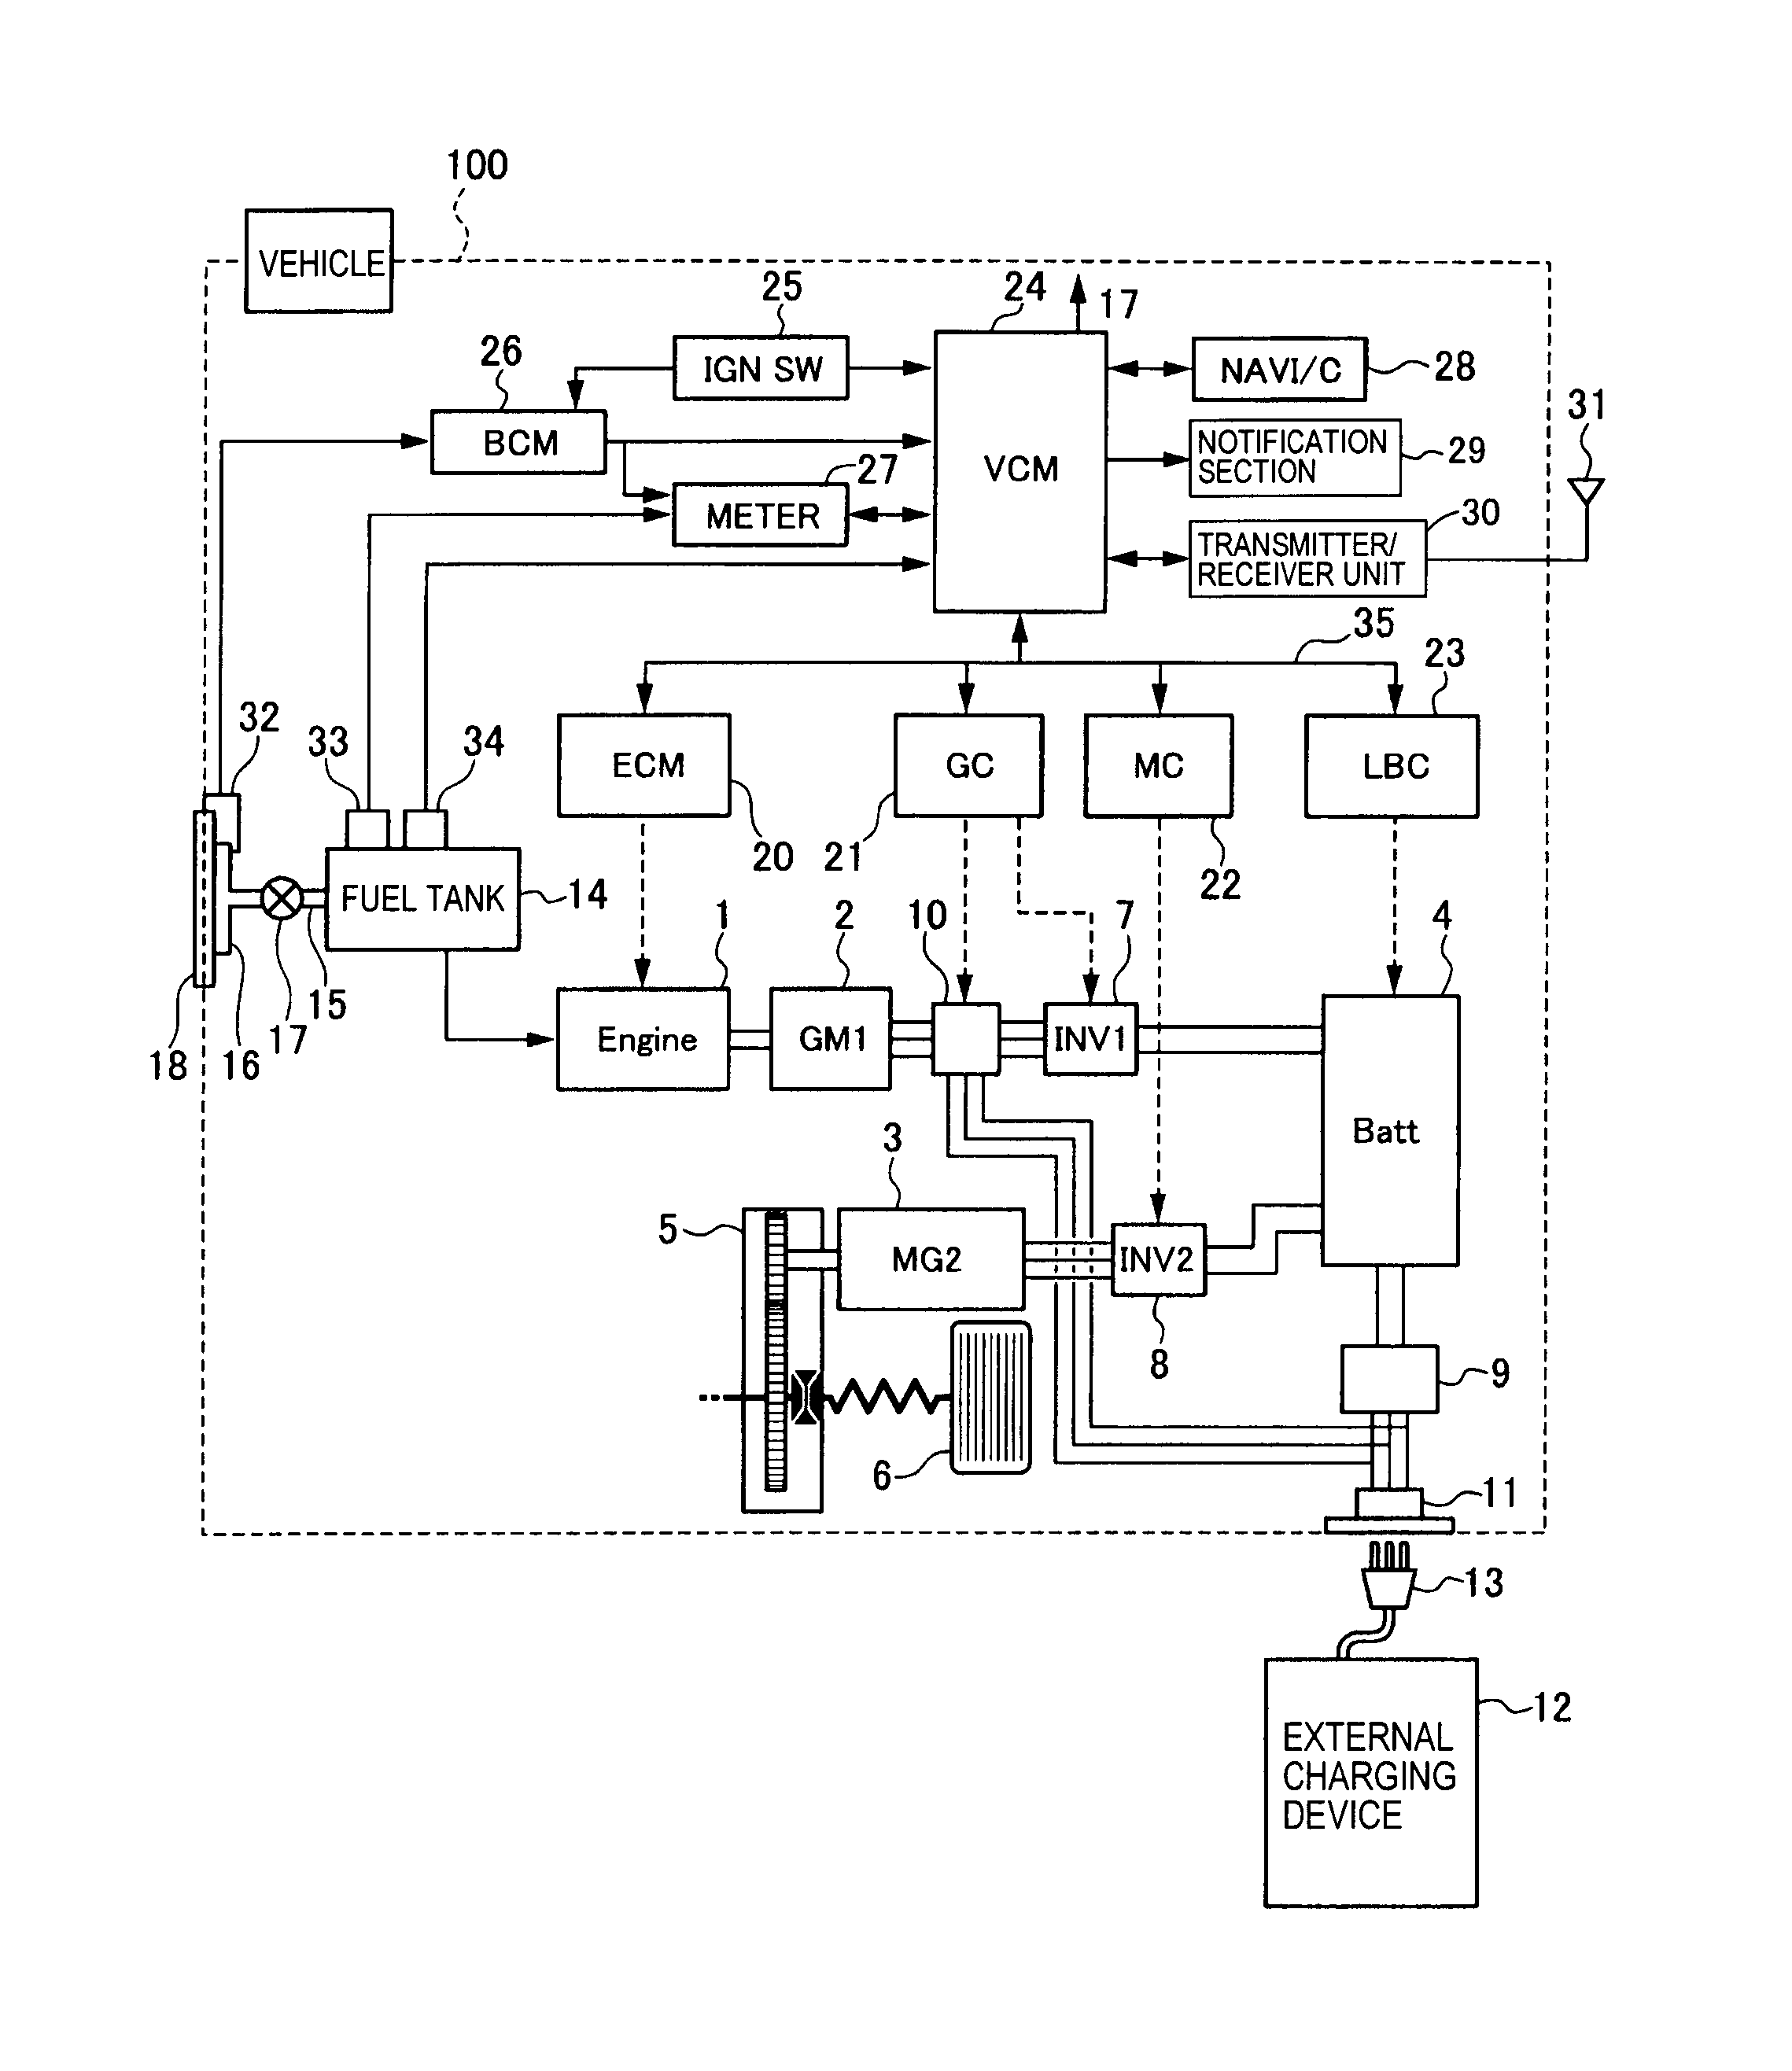 cub cadet gt2550 wiring diagram